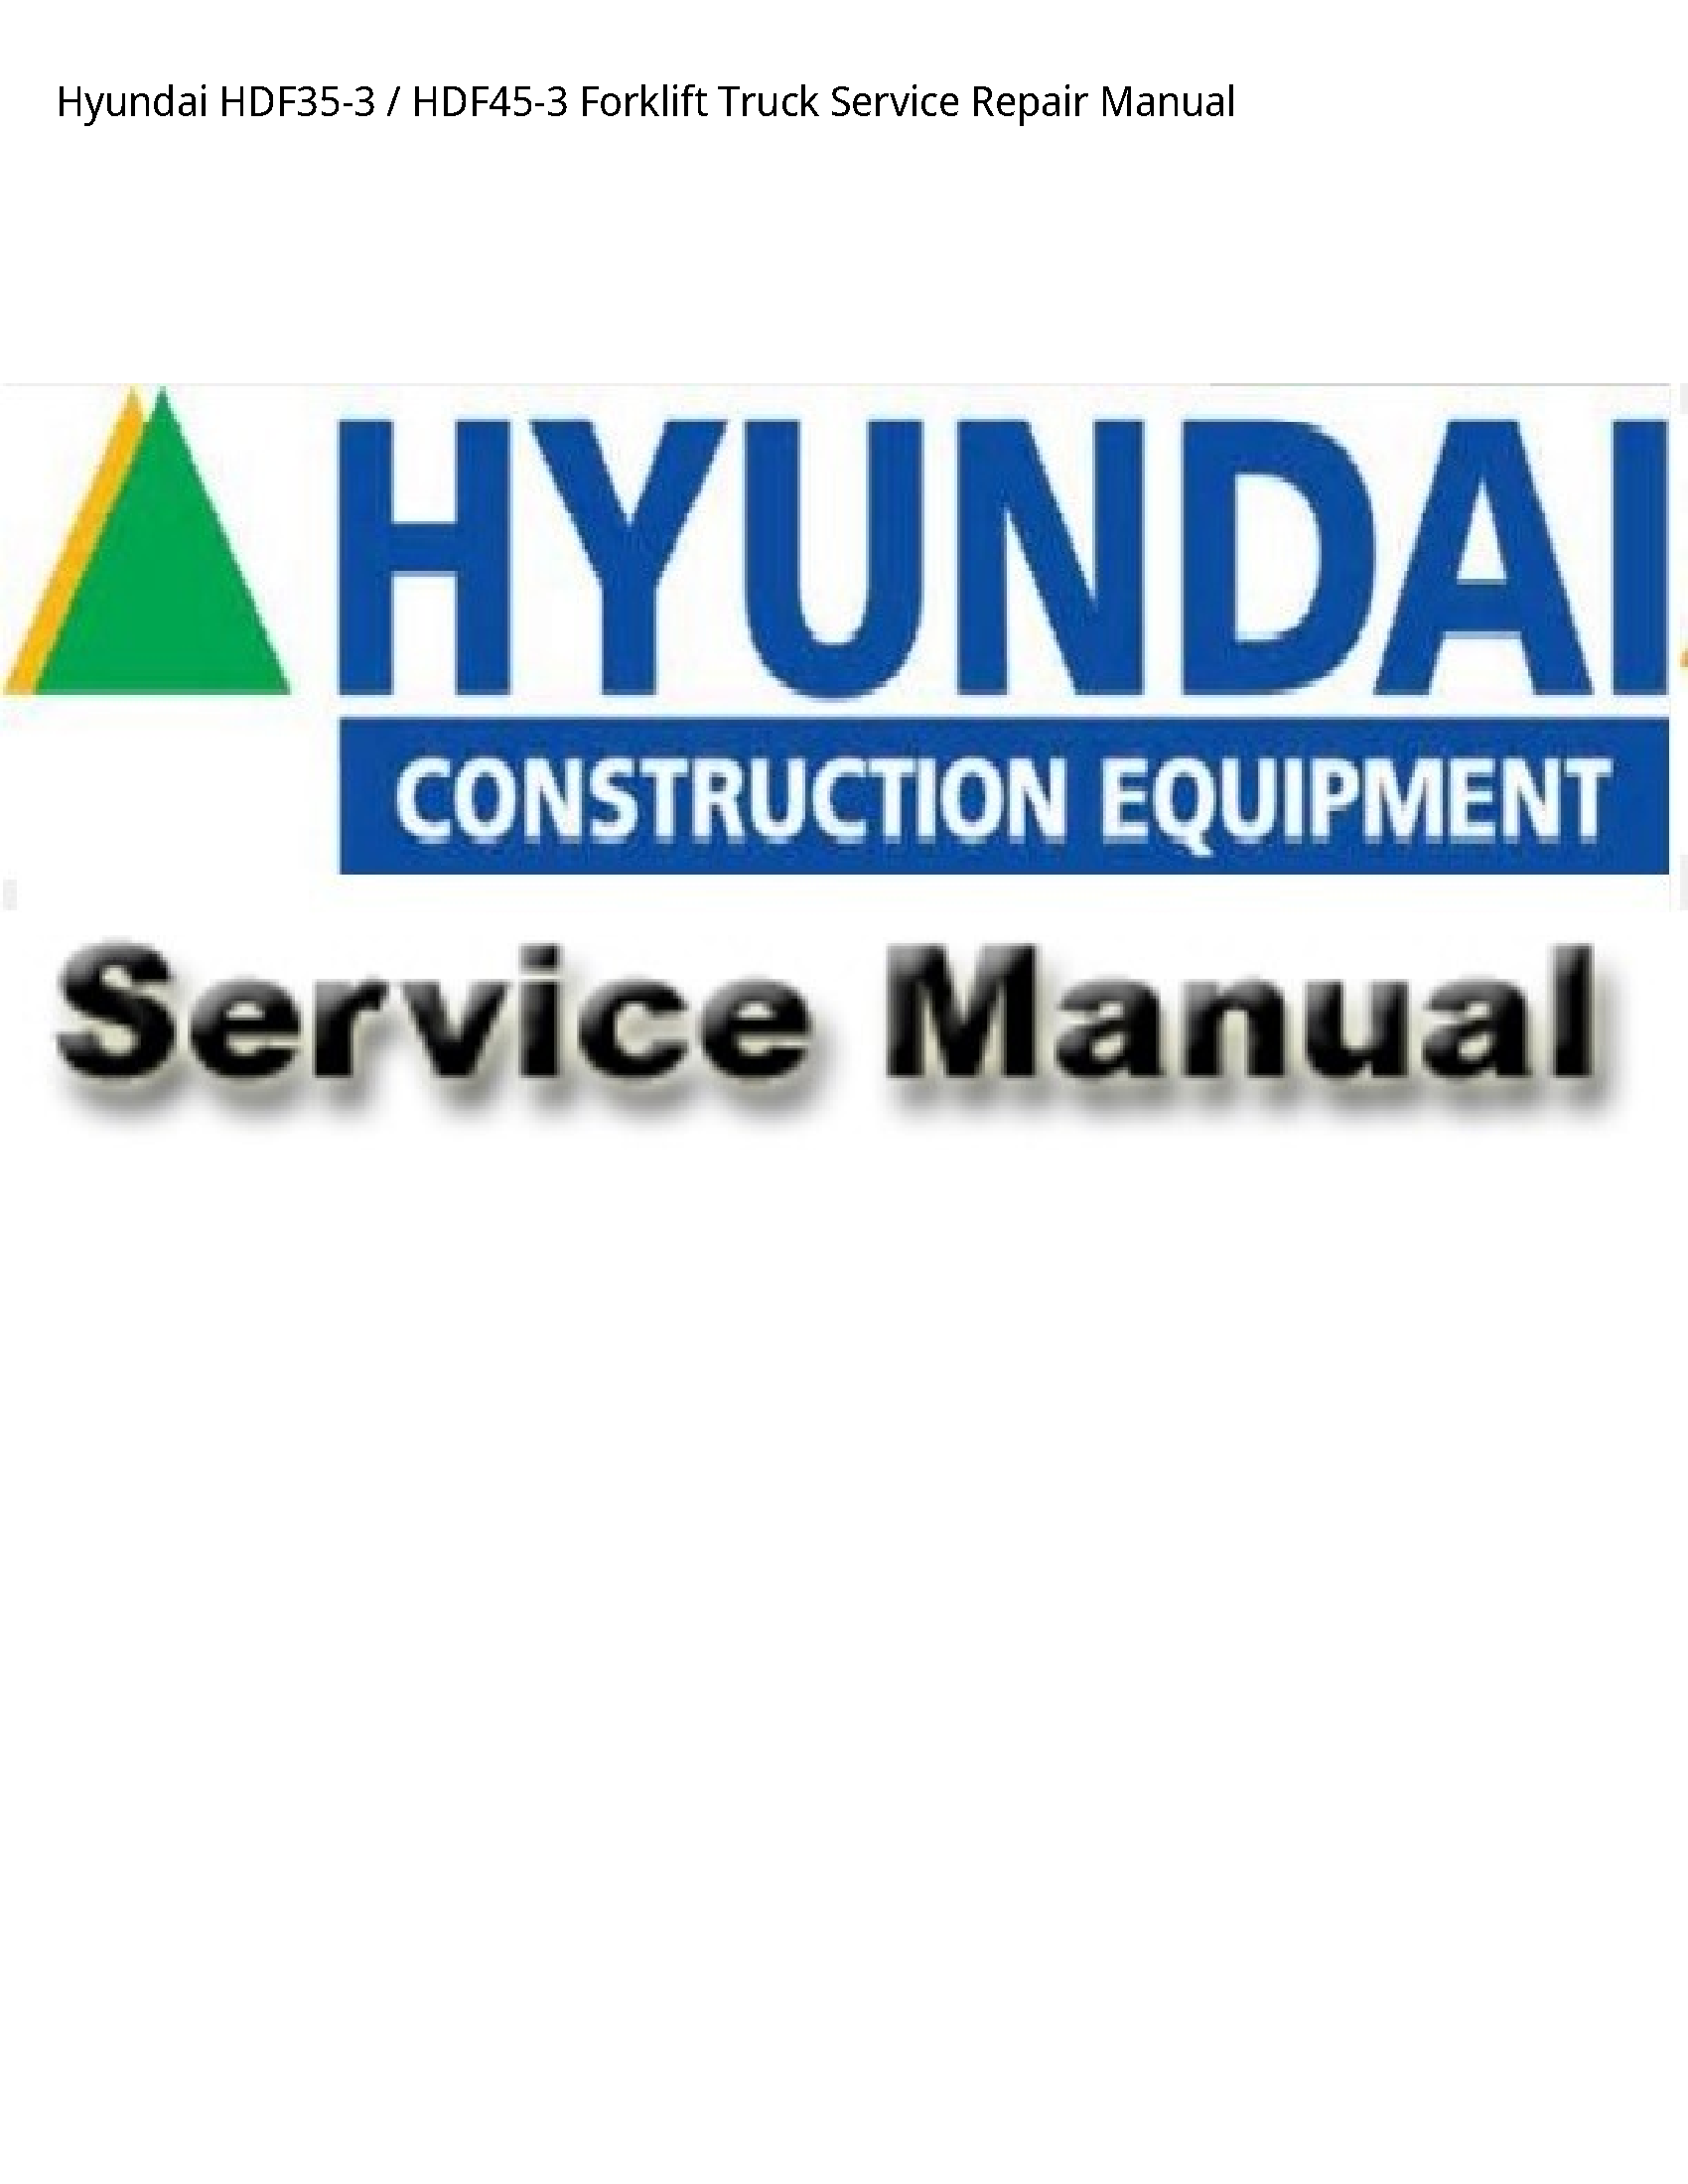 Hyundai HDF35-3 Forklift Truck manual